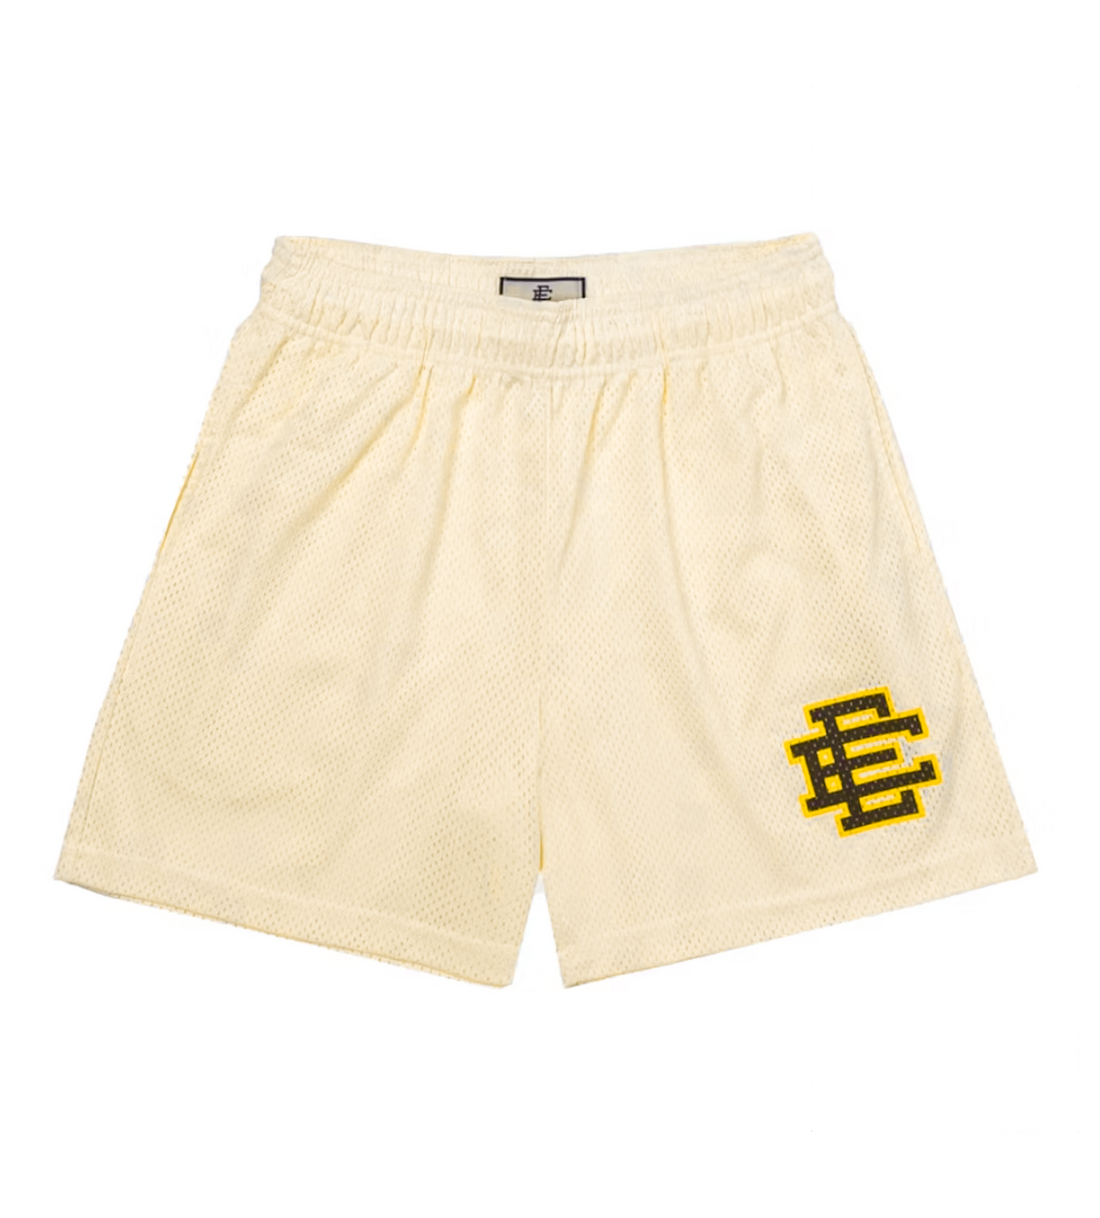 Eric Emanuel Yellow/Black Logo Shorts Cream